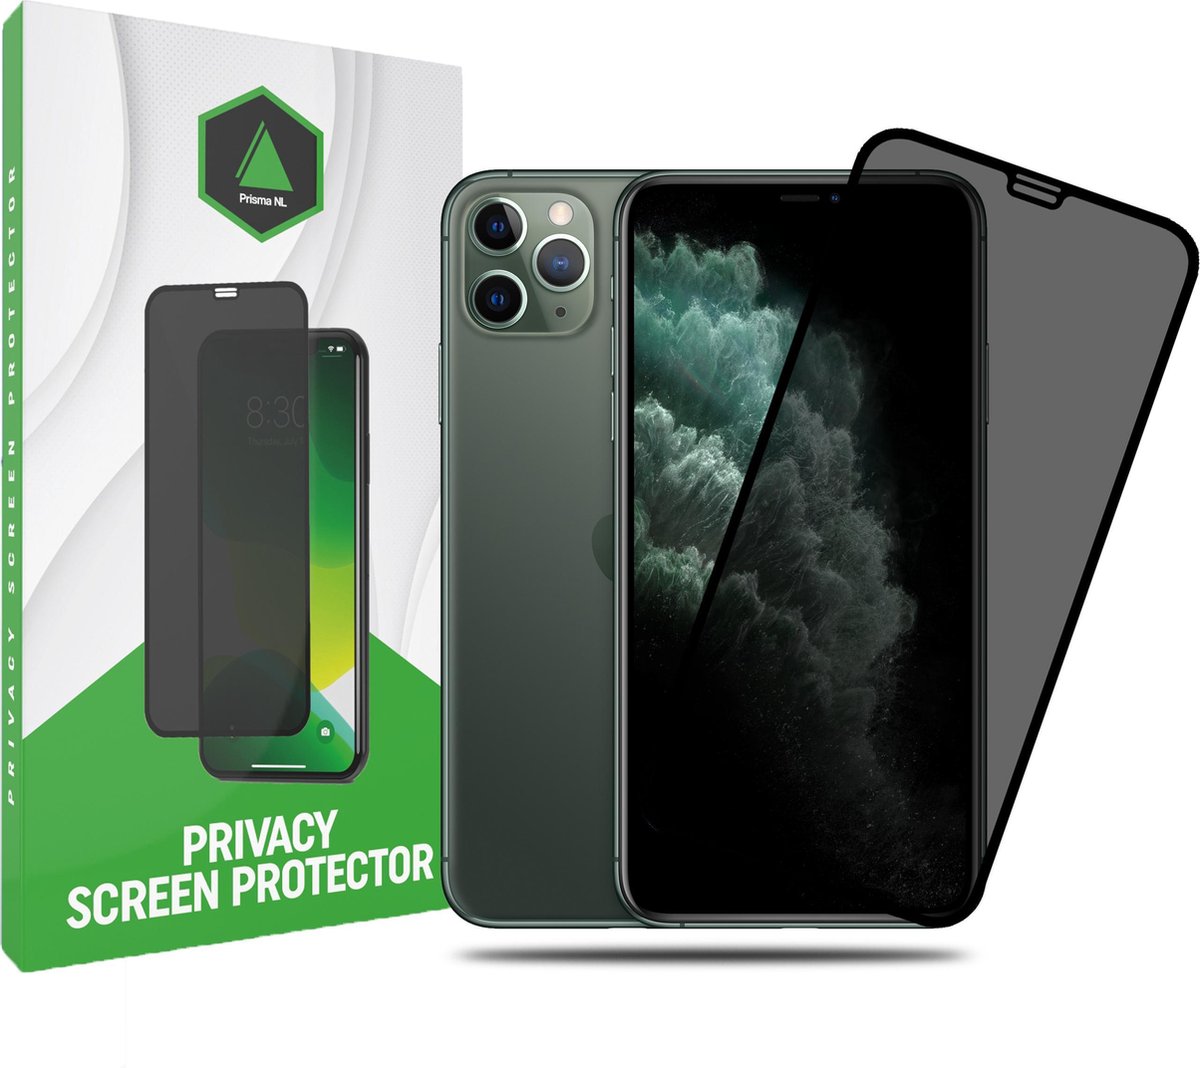 Prisma NL® iPhone Privacy Screenprotector voor iPhone 11 Pro Max & iPhone XS Max - Anti Spy - Premium - Screenprotector - Beschermglas - Gehard glas - 9H Glas - Zwarte rand - Tempered Glass - Full cover